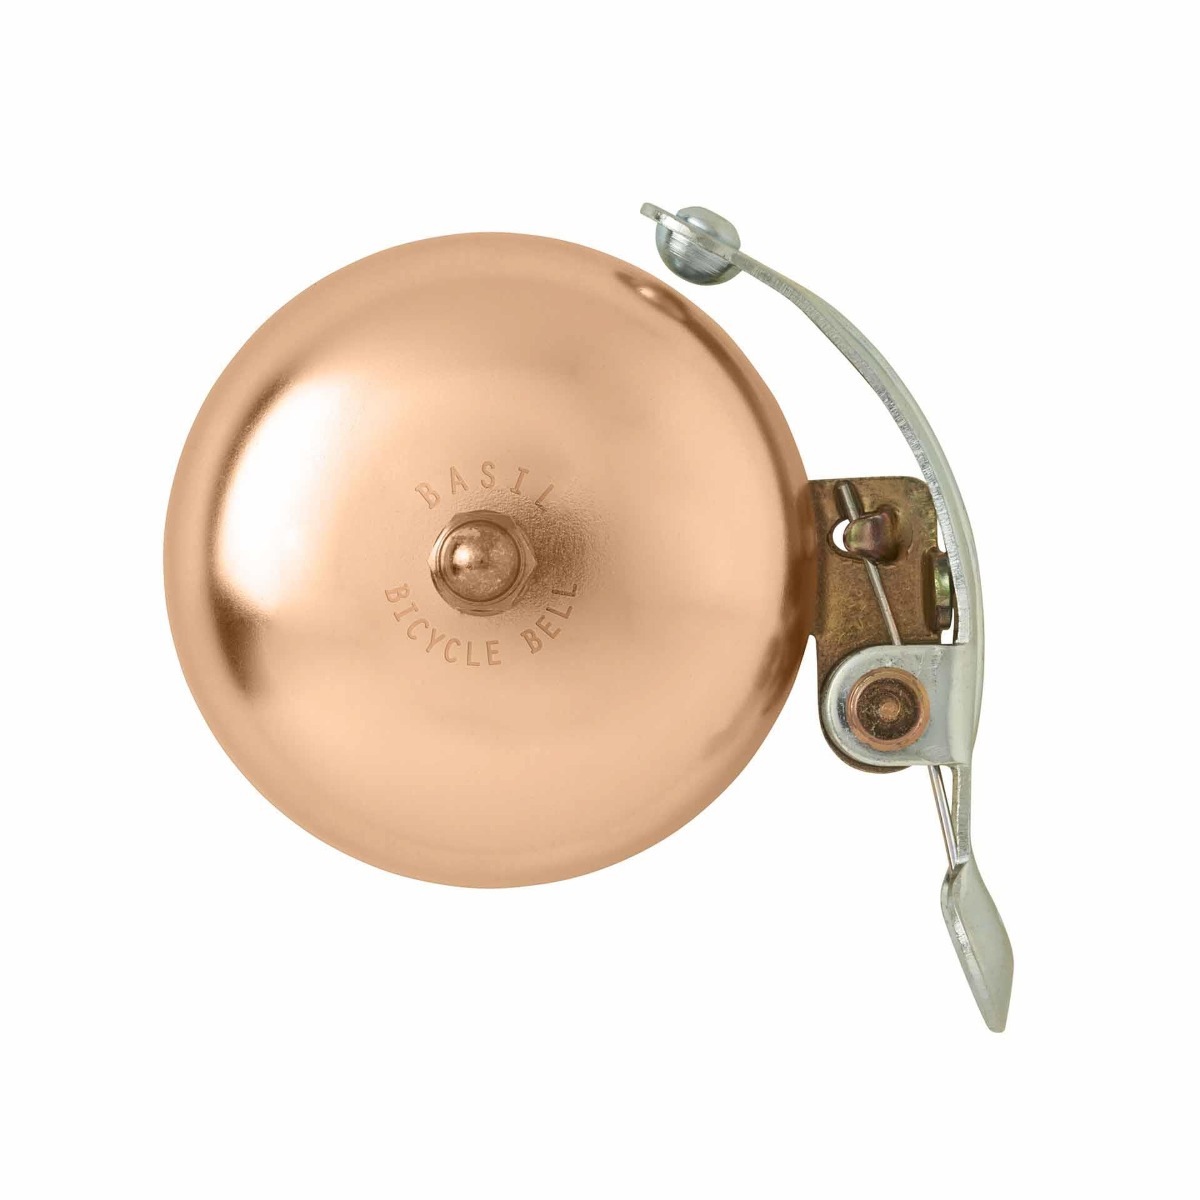 Zvans Basil Portland bell, 55mm, rose gold